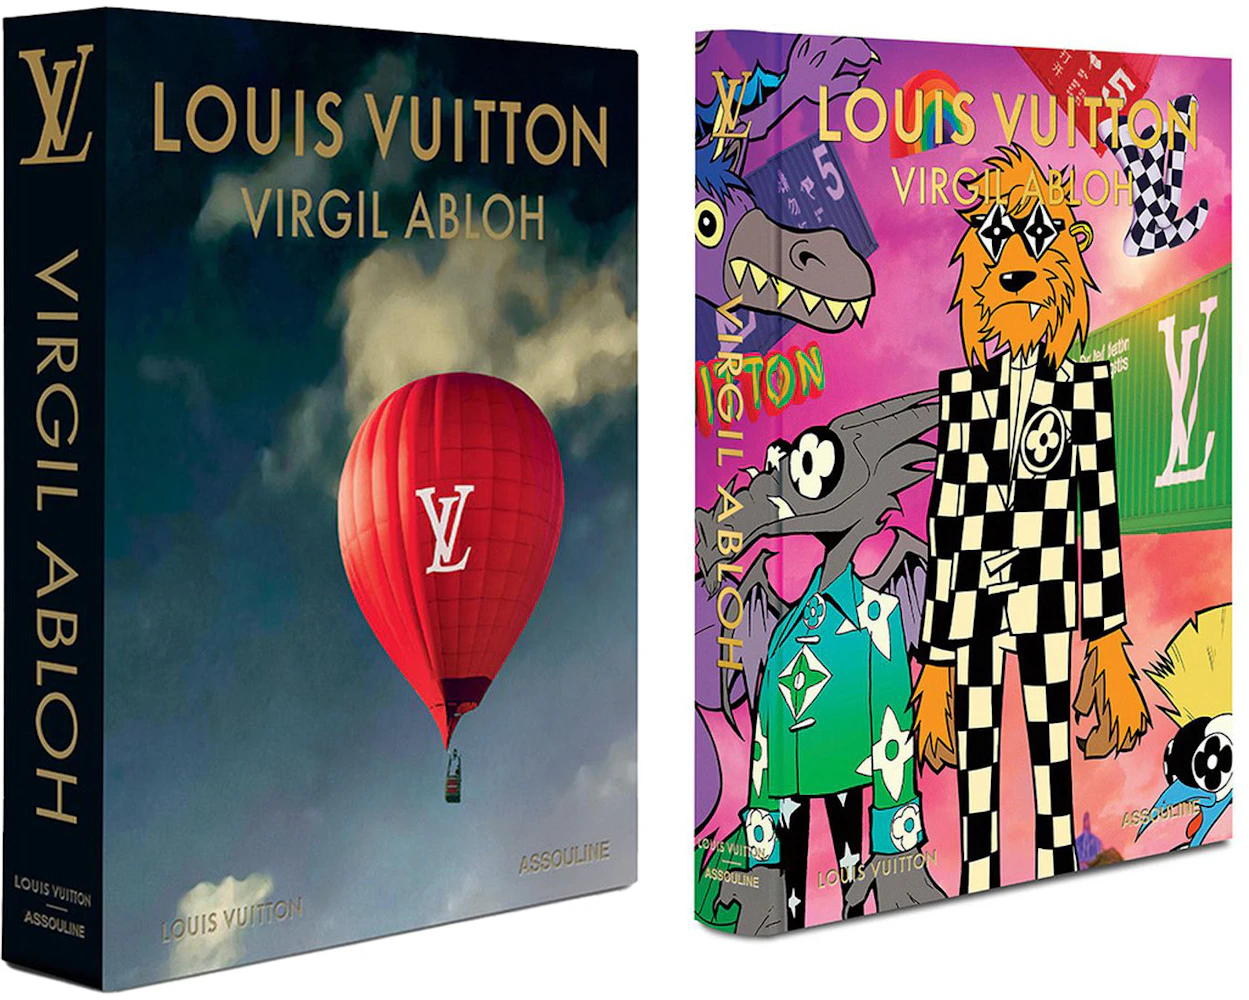 LOUIS VUITTON UNBOXING HARD TO FIND : VIRGIL ABLOH BOOK FLIP